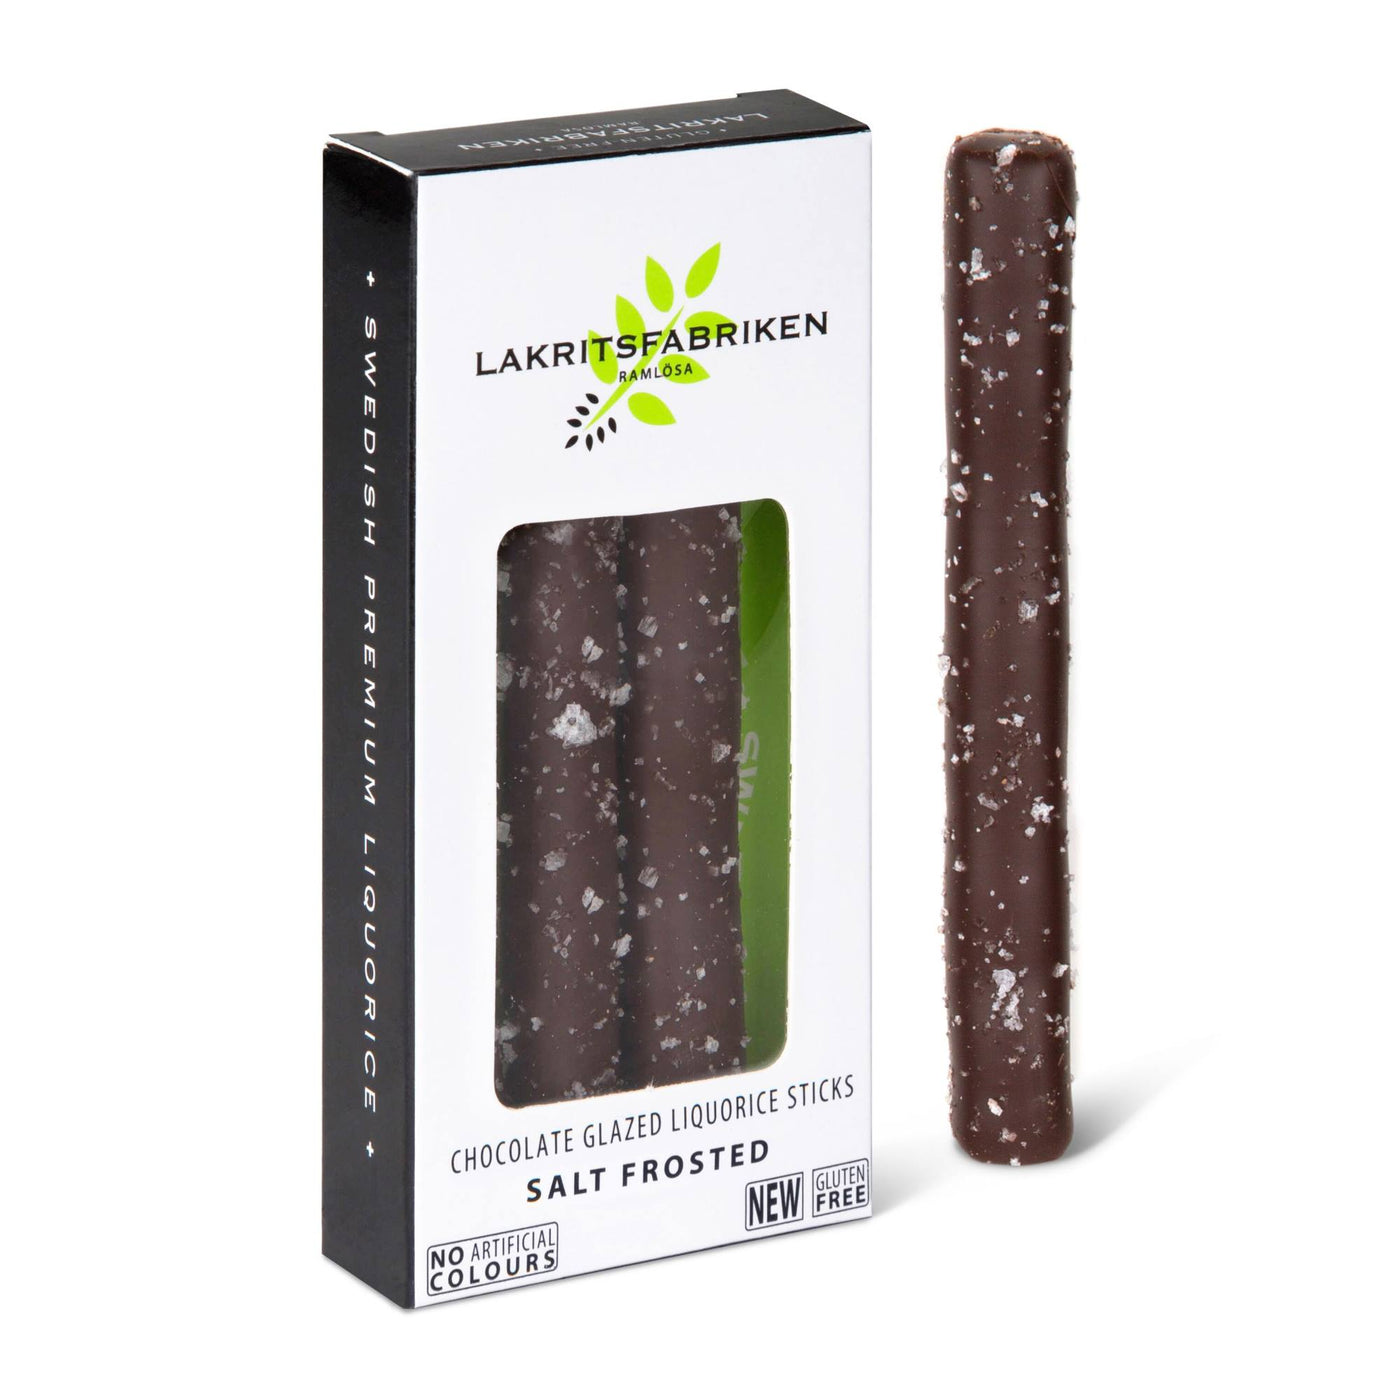 Lakritsfabriken Salt Frosted Sticks – Dark Chocolate Glazed Salt Liquorice